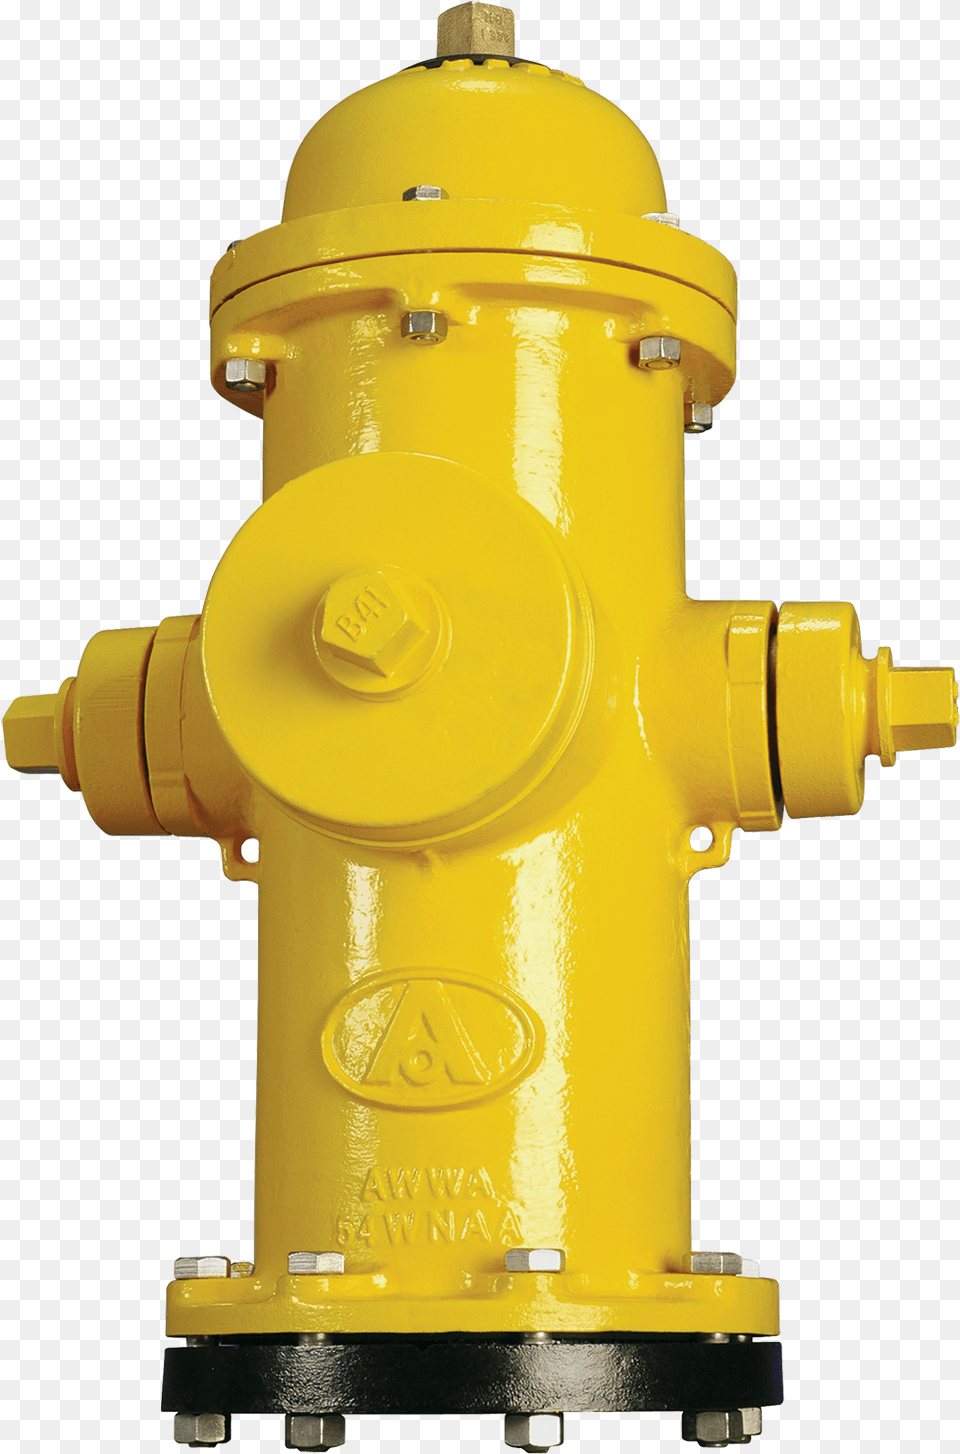 14 American Darling B 62 B American Darling Fire Hydrant, Fire Hydrant Free Transparent Png